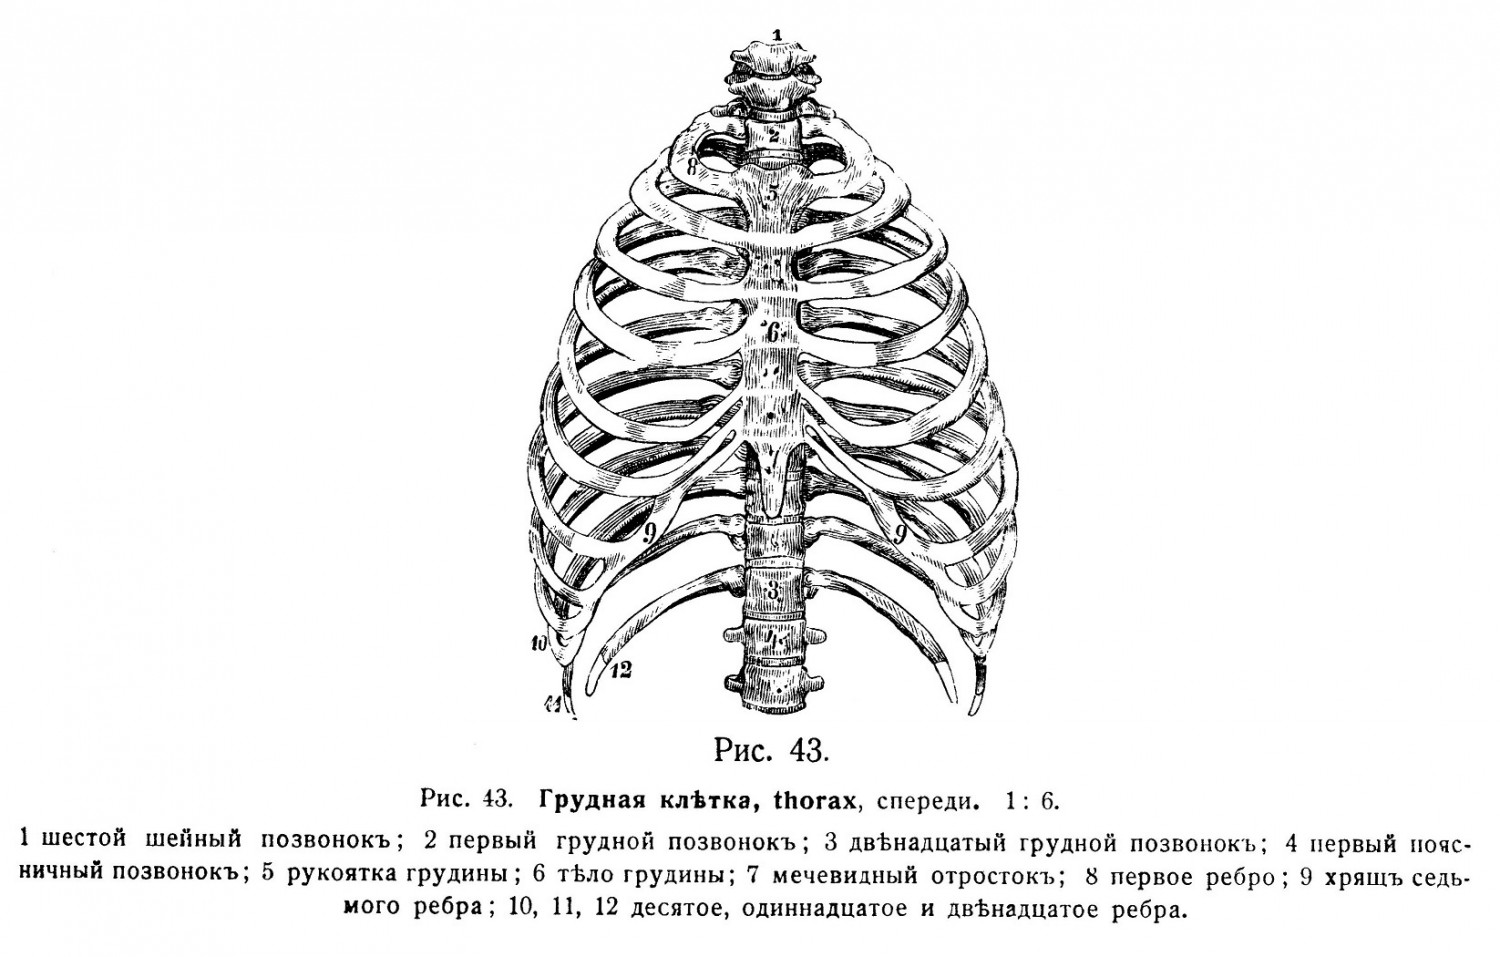 Грудная клѣтка, thorax, спереди. 1: 6.